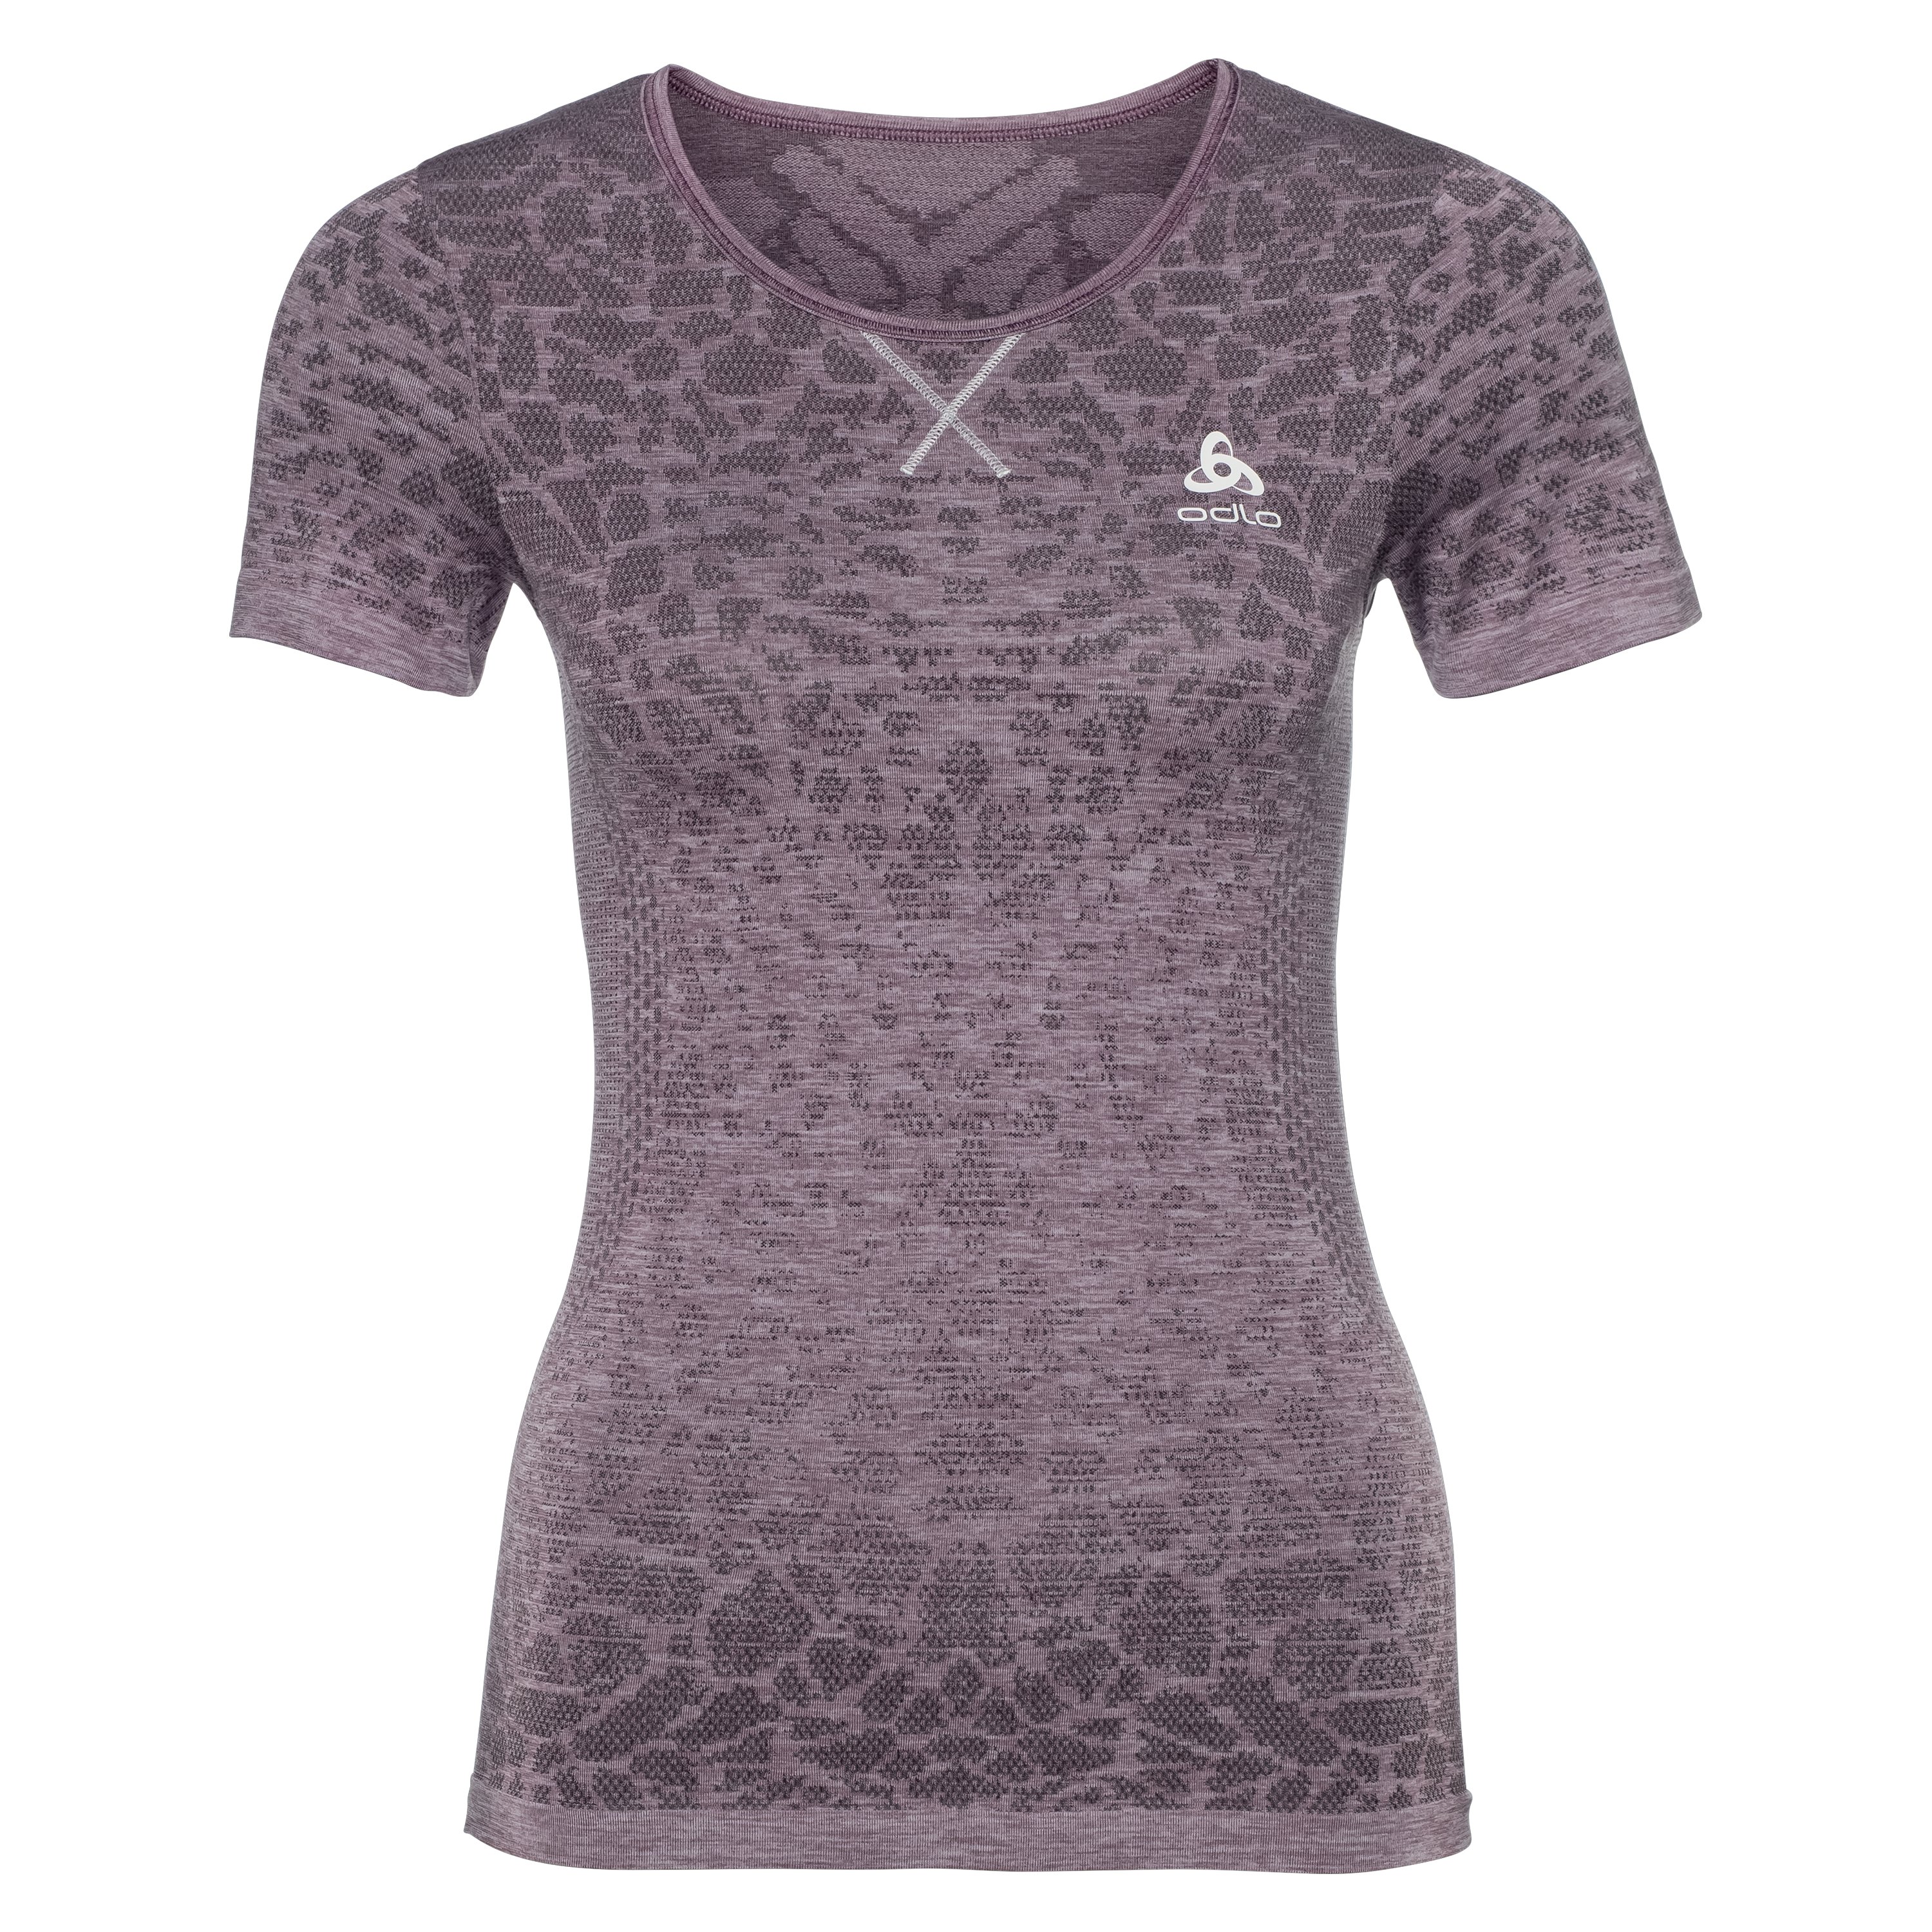 ODLO Blackcomb Light Base Layer T-Shirt für Damen, S, violet